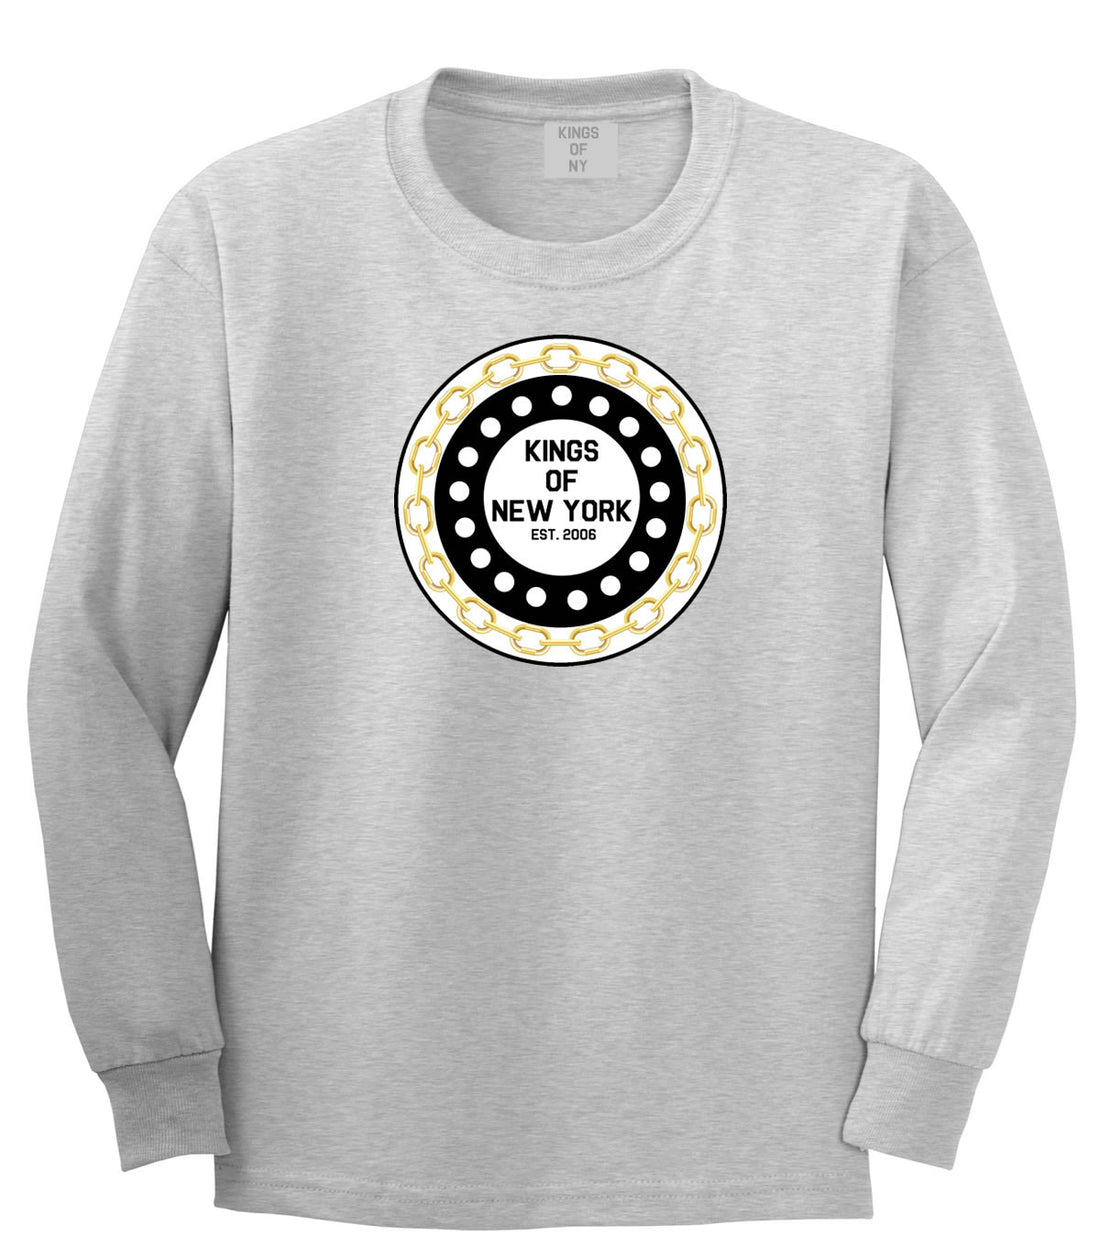 Chain Logo New York Brooklyn Bronx Long Sleeve Boys Kids T-Shirt In Grey by Kings Of NY